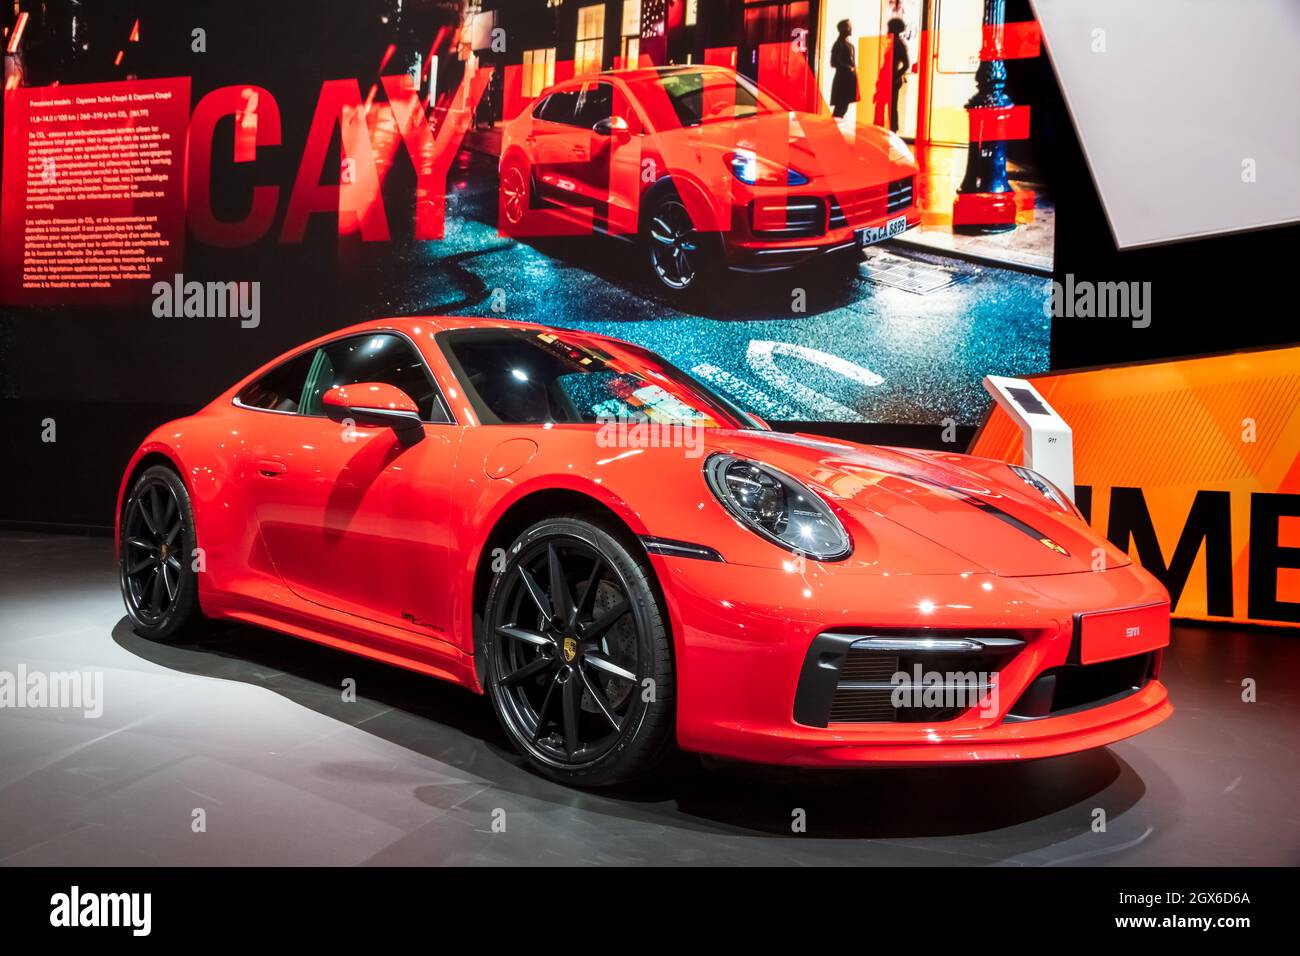 Porsche 911 Carrera sports car showcased at the Autosalon 2020 Motor Show. Brussels, Belgium - January 9, 2020. Stock Photo